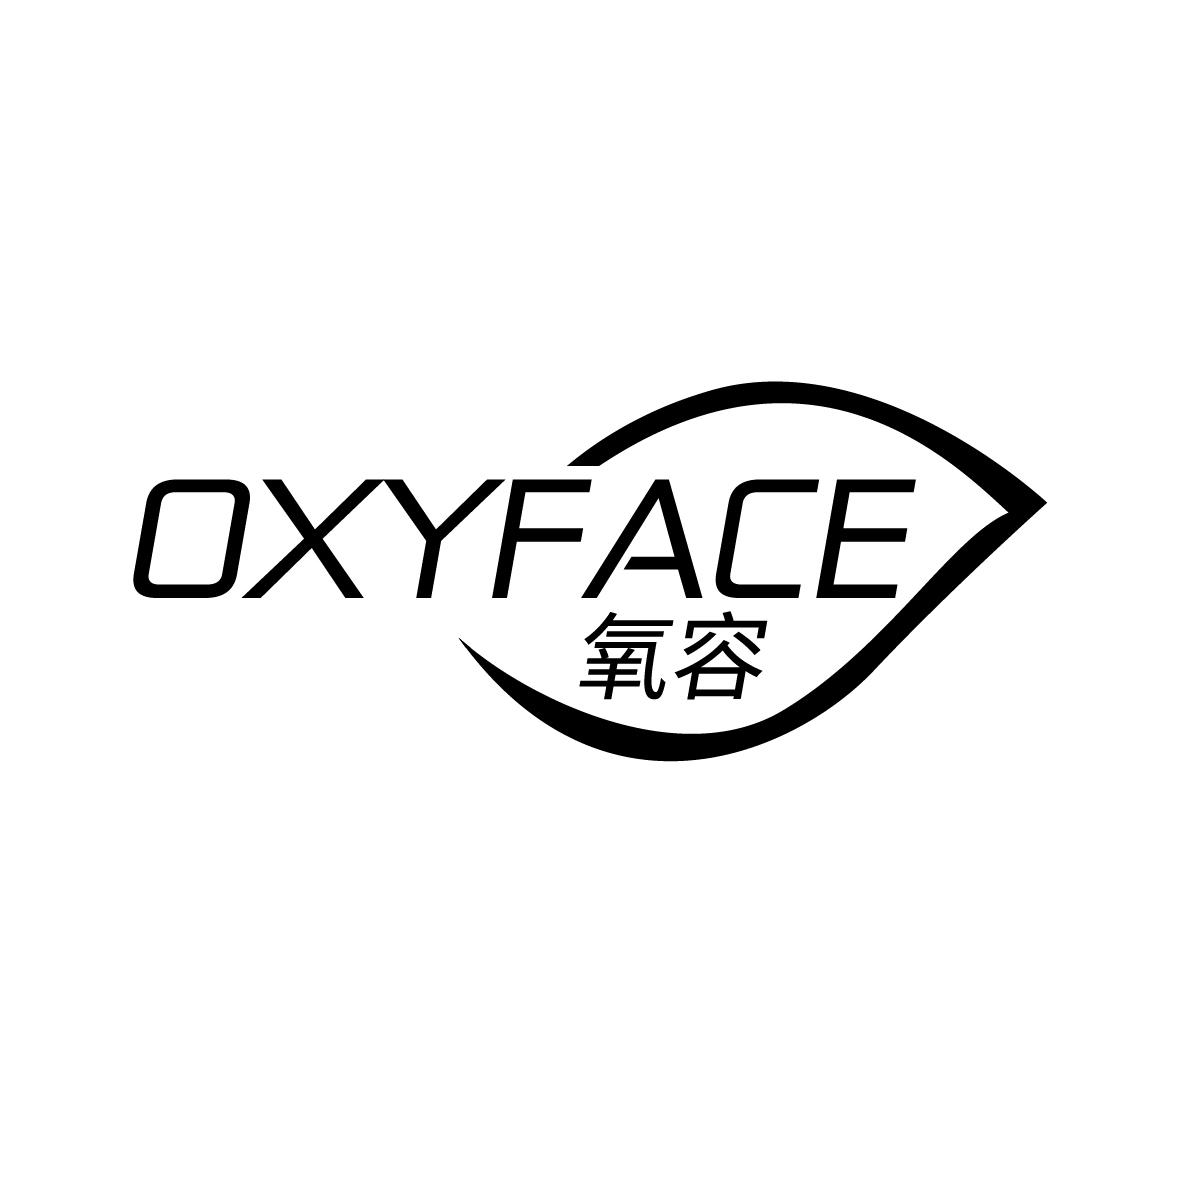   OXYFACE